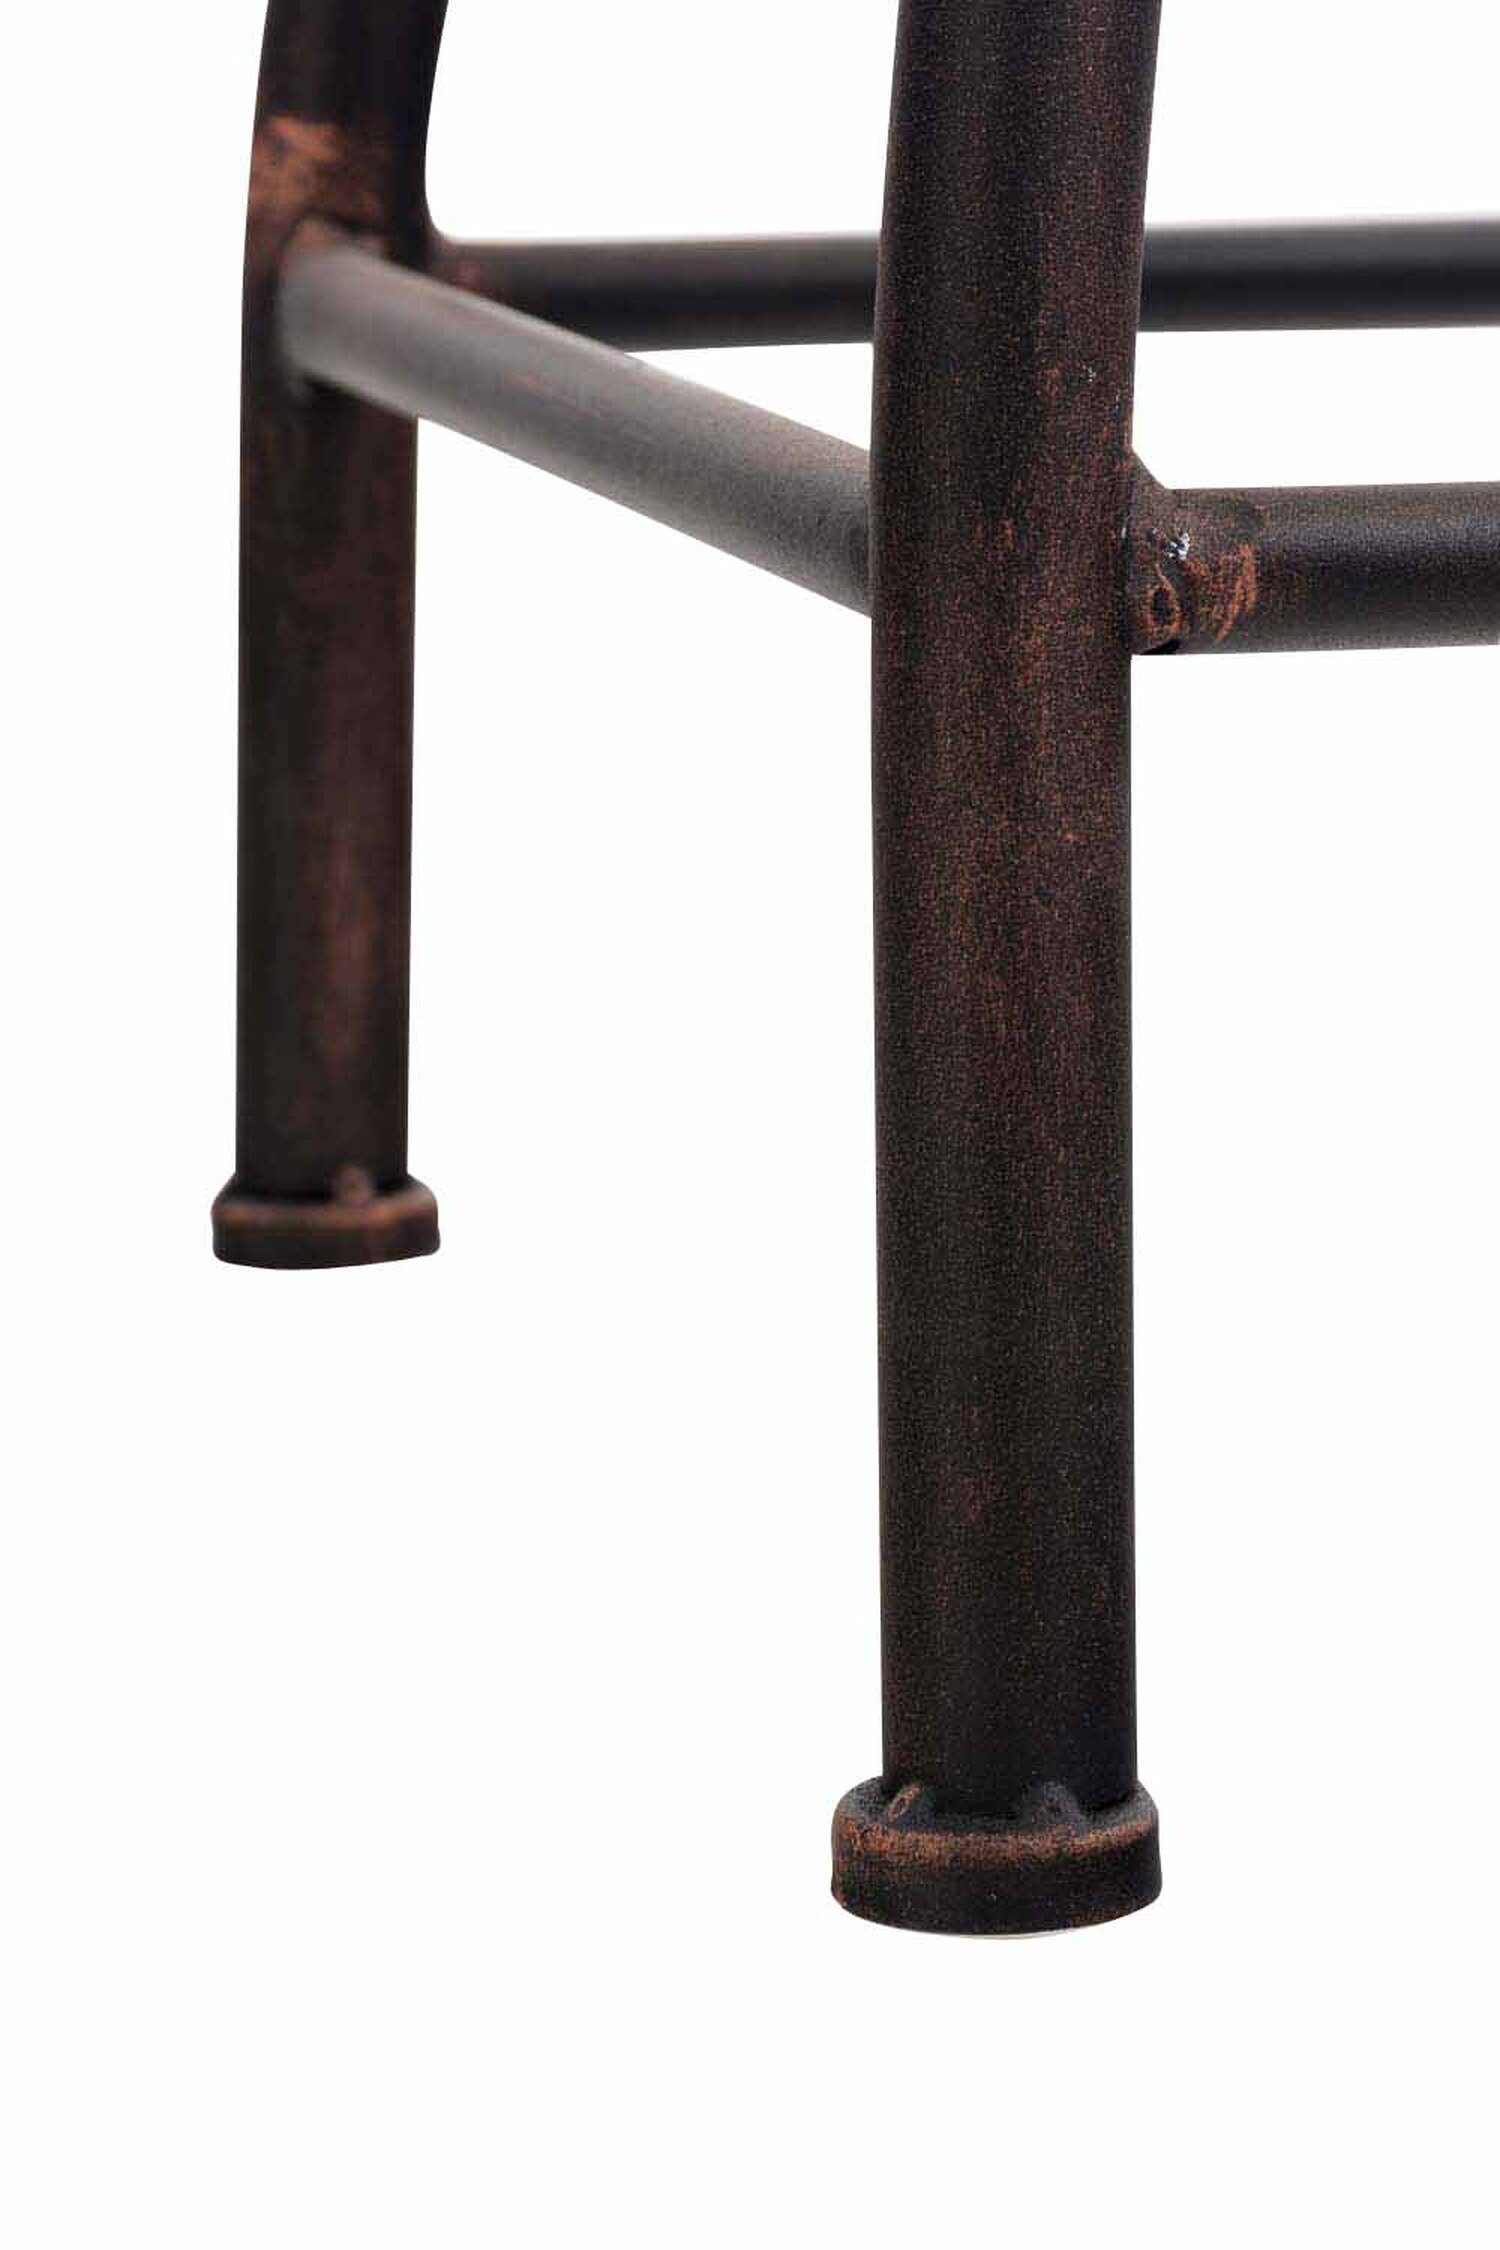 & Barhocker 4-Fuß Sitzfläche: Metall Theke Küche), TPFLiving Gestell angenehmer Hocker Fußstütze - (Barstuhl Buffon Holz für Bronze mit